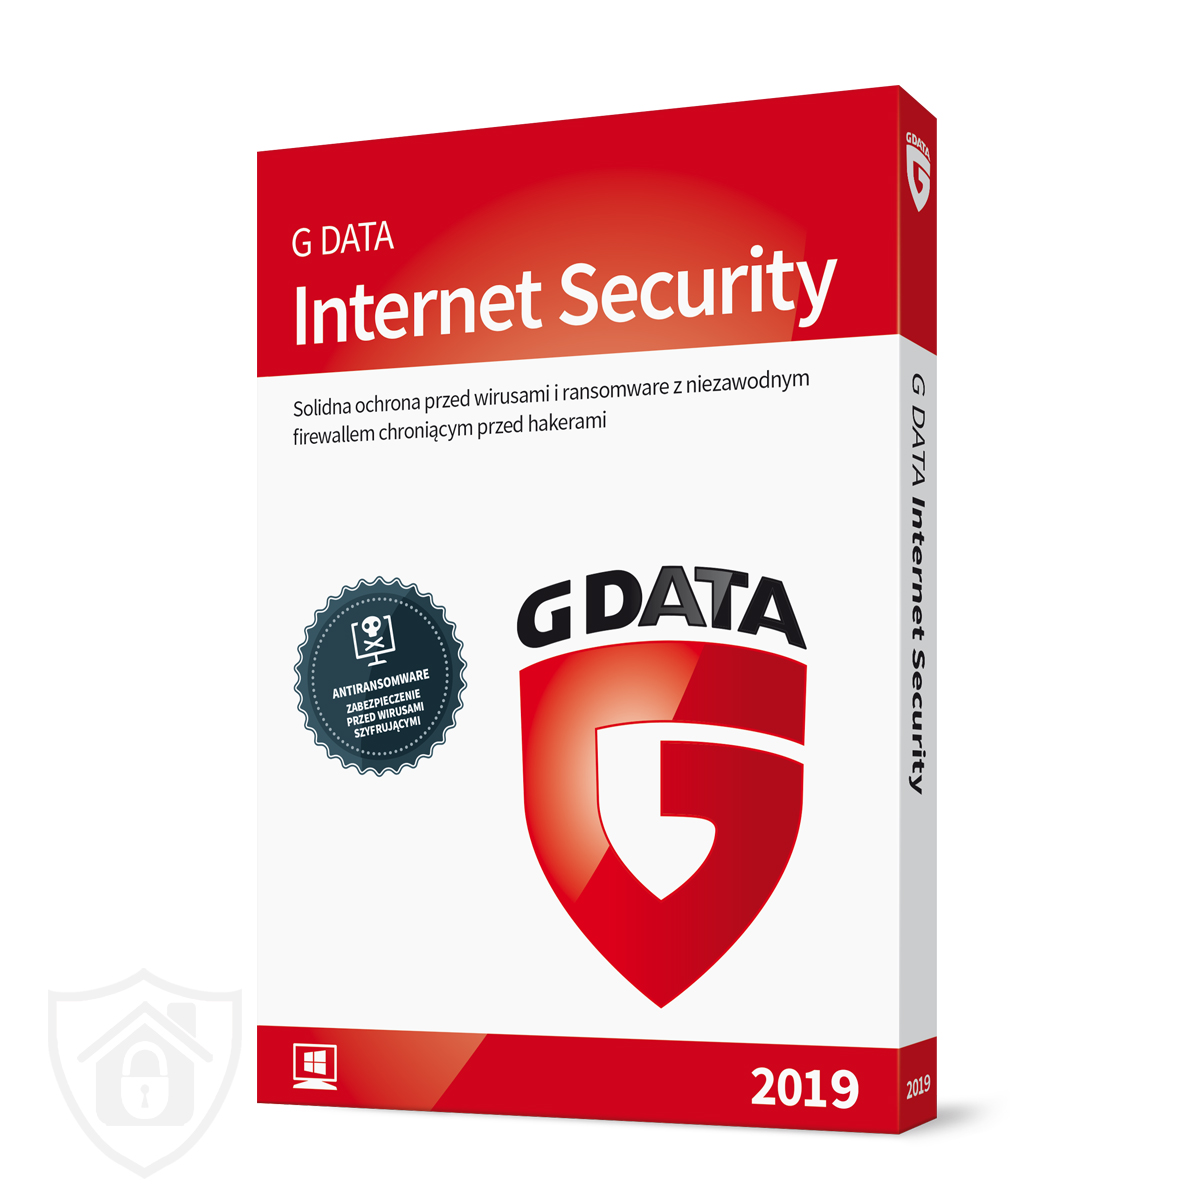 G DATA Internet Security 2019